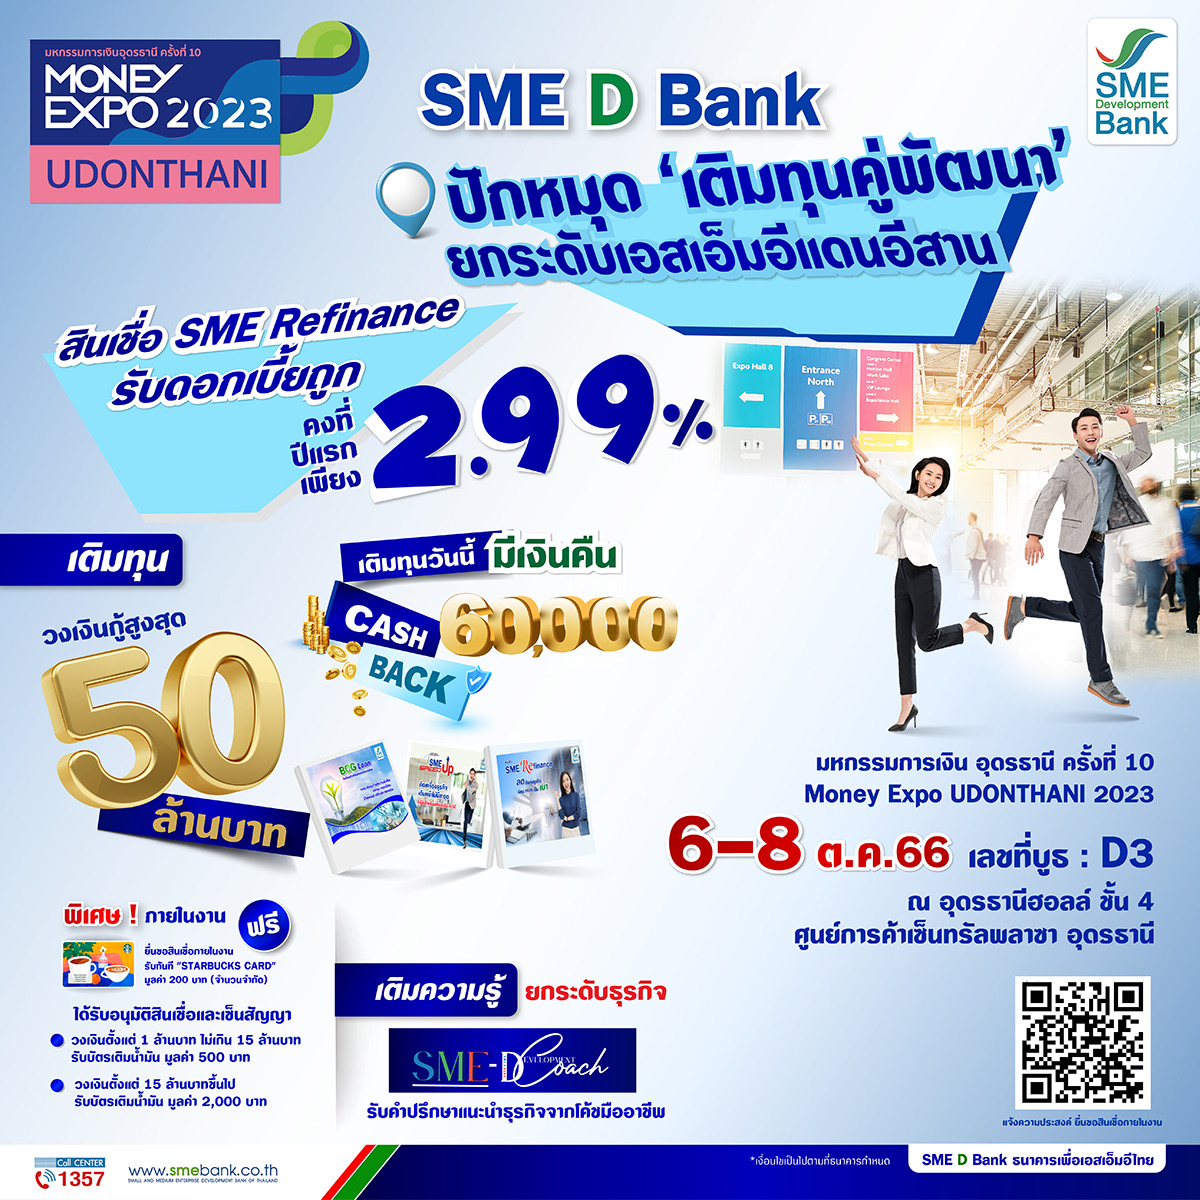 SME D Bank ร่วมงาน Money Expo UDONTHANI 2023